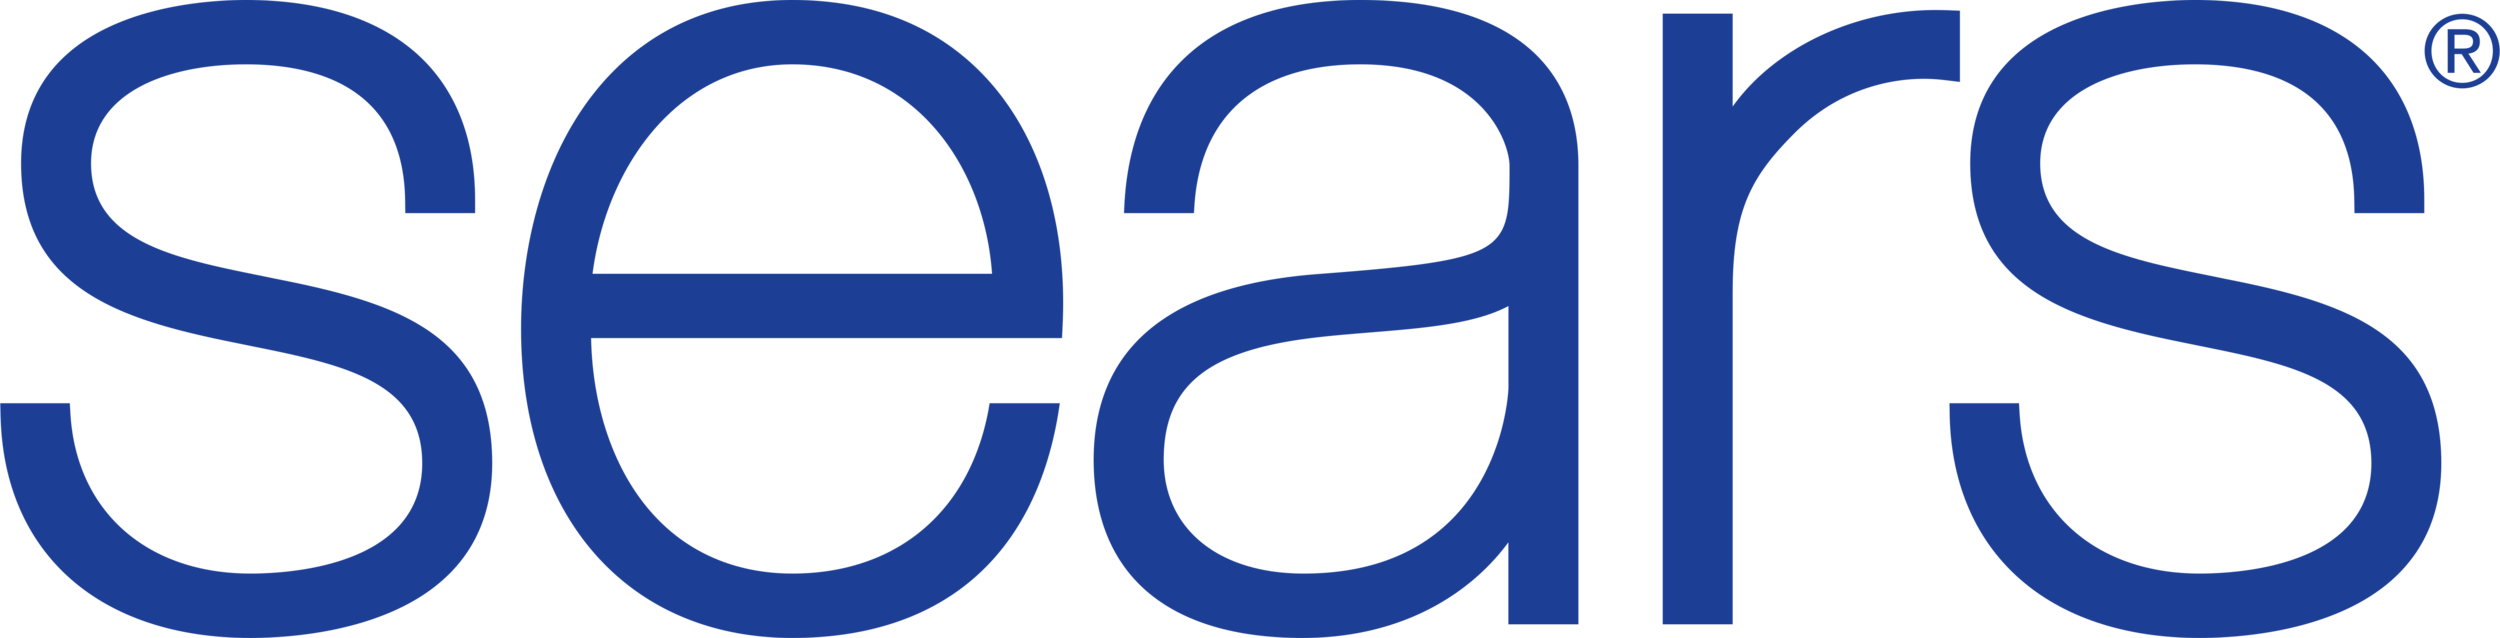 sears-logo.png